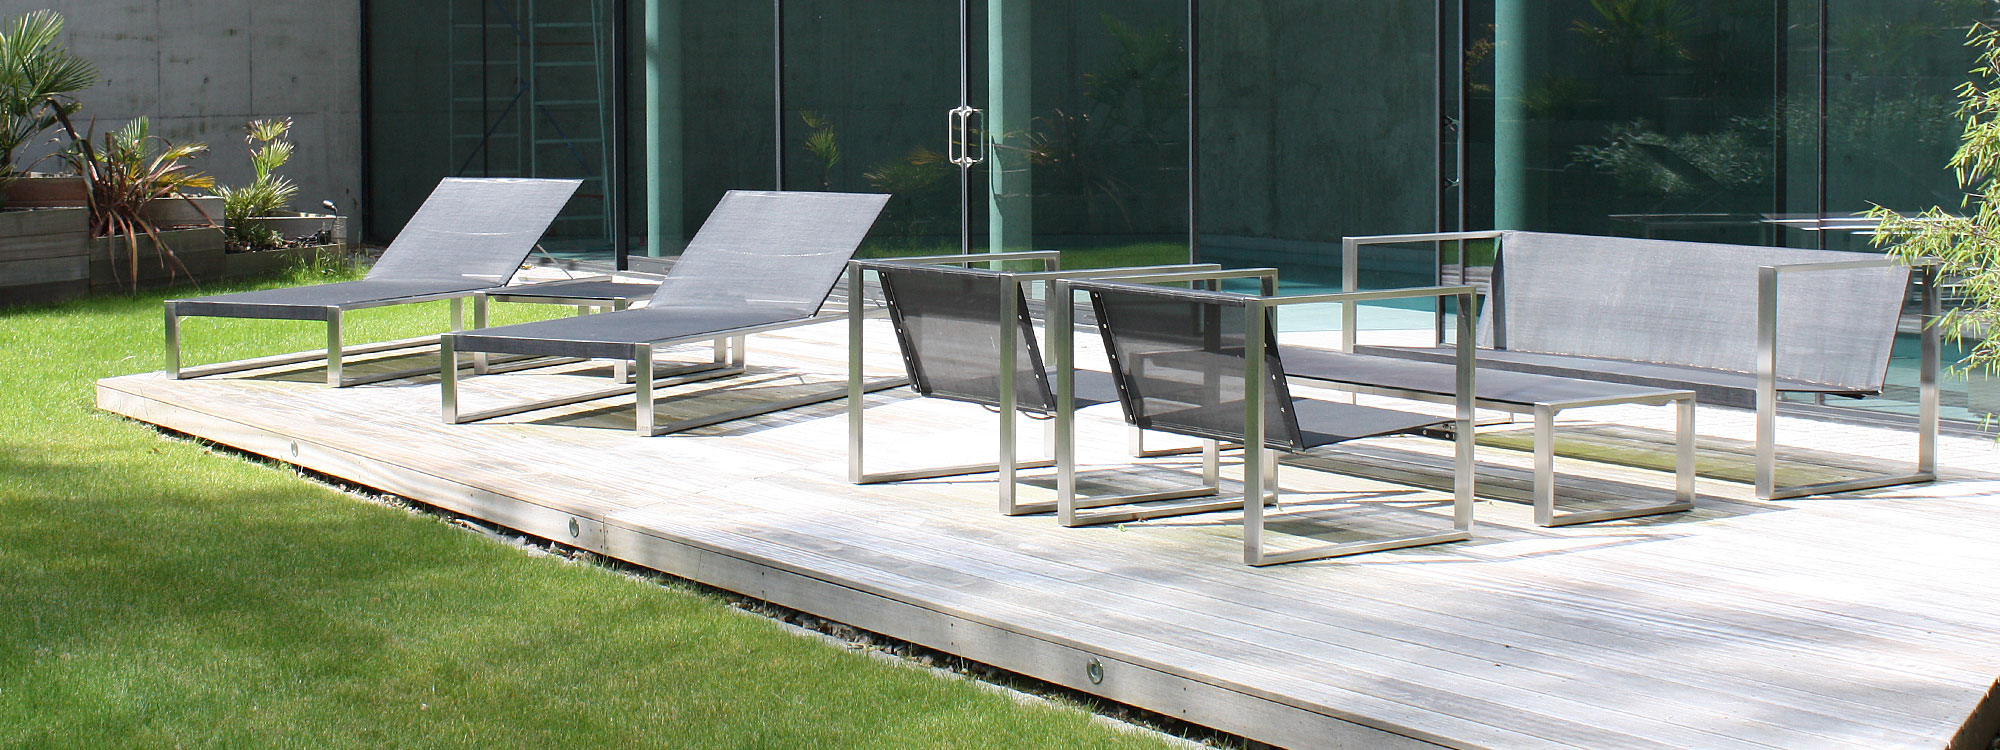 Cima Lounge modernist garden sofas & architectural exterior lounge furniture by FueraDentro modern garden furniture company – Netherlands.